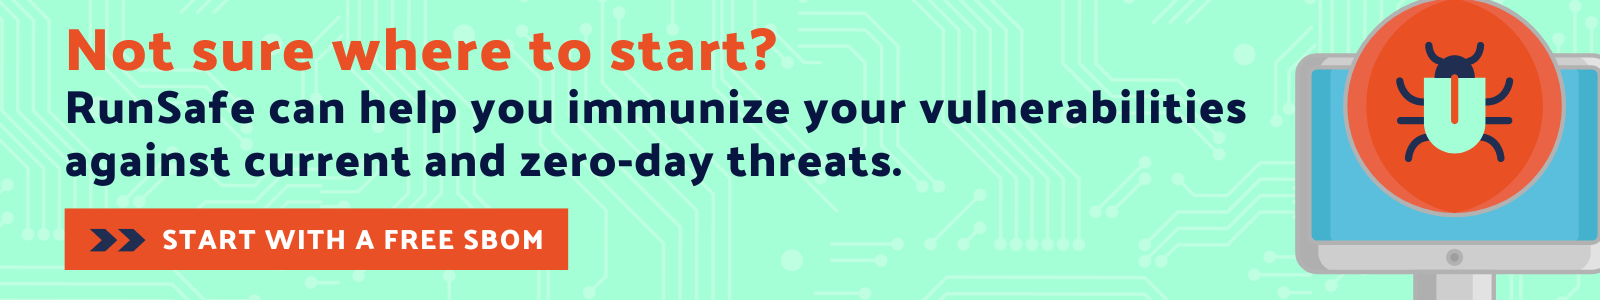 Immunize your vulnerabilities with RunSafe